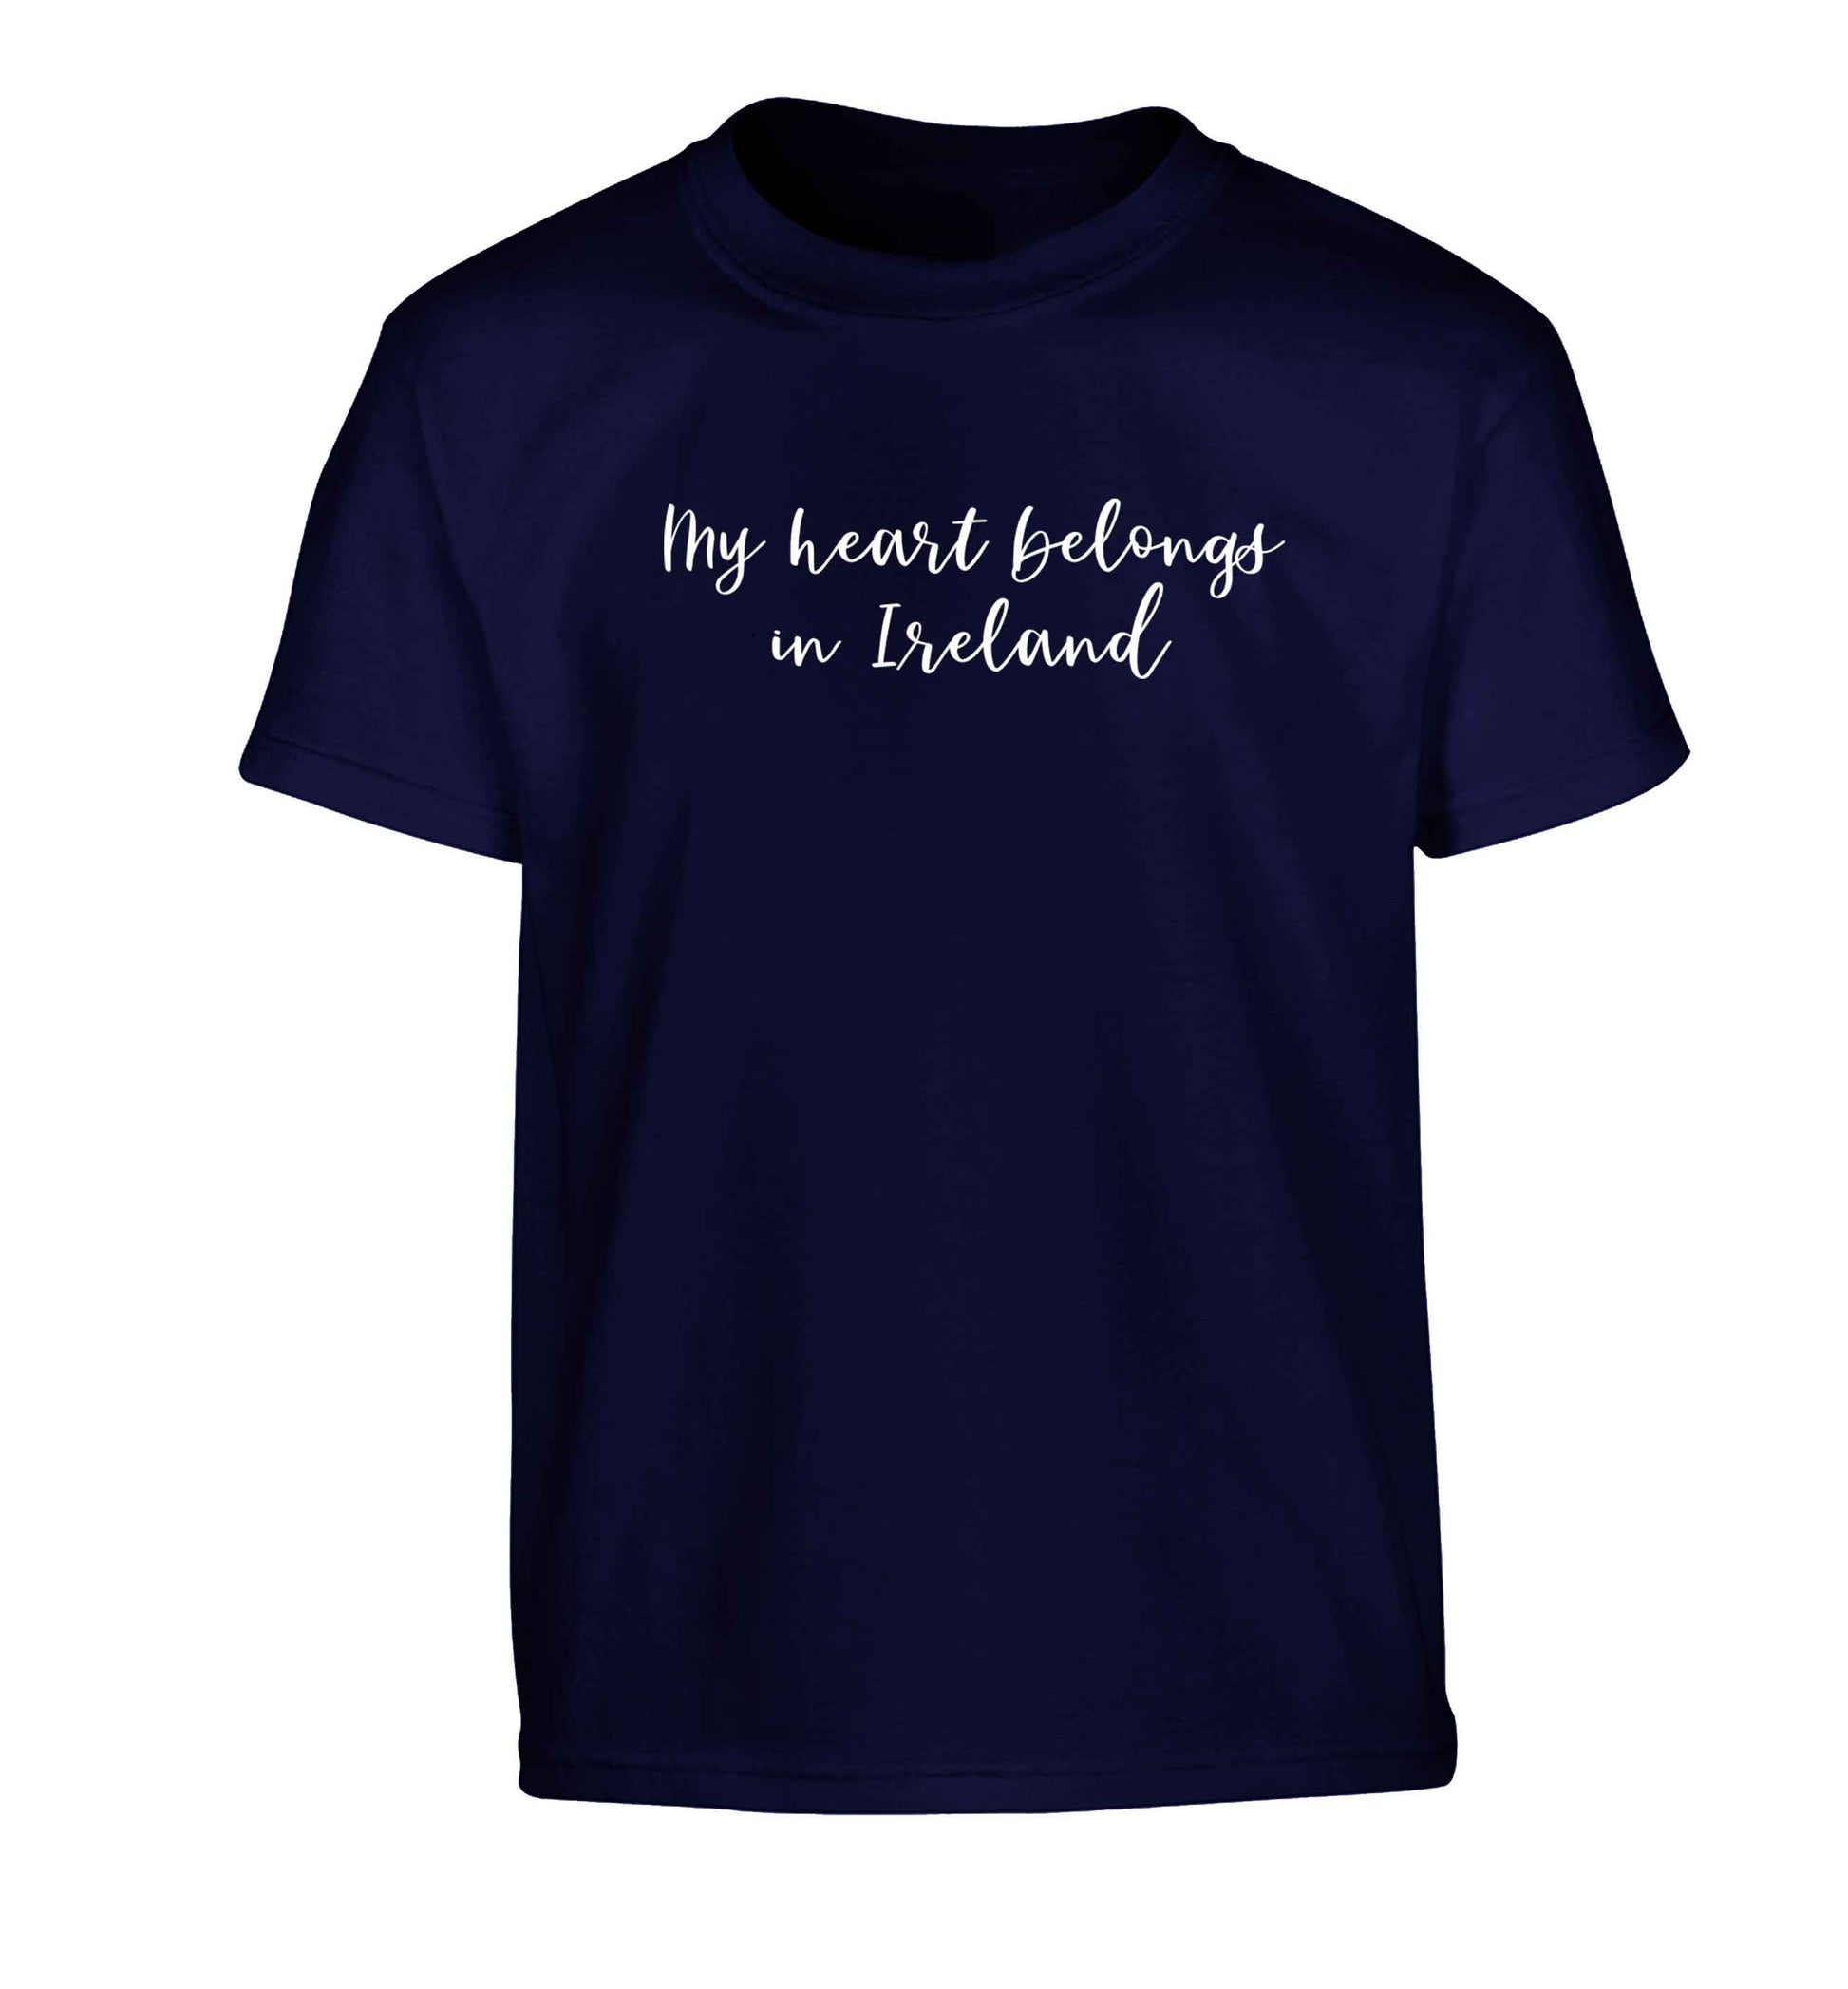 My heart belongs in Ireland Children's navy Tshirt 12-13 Years